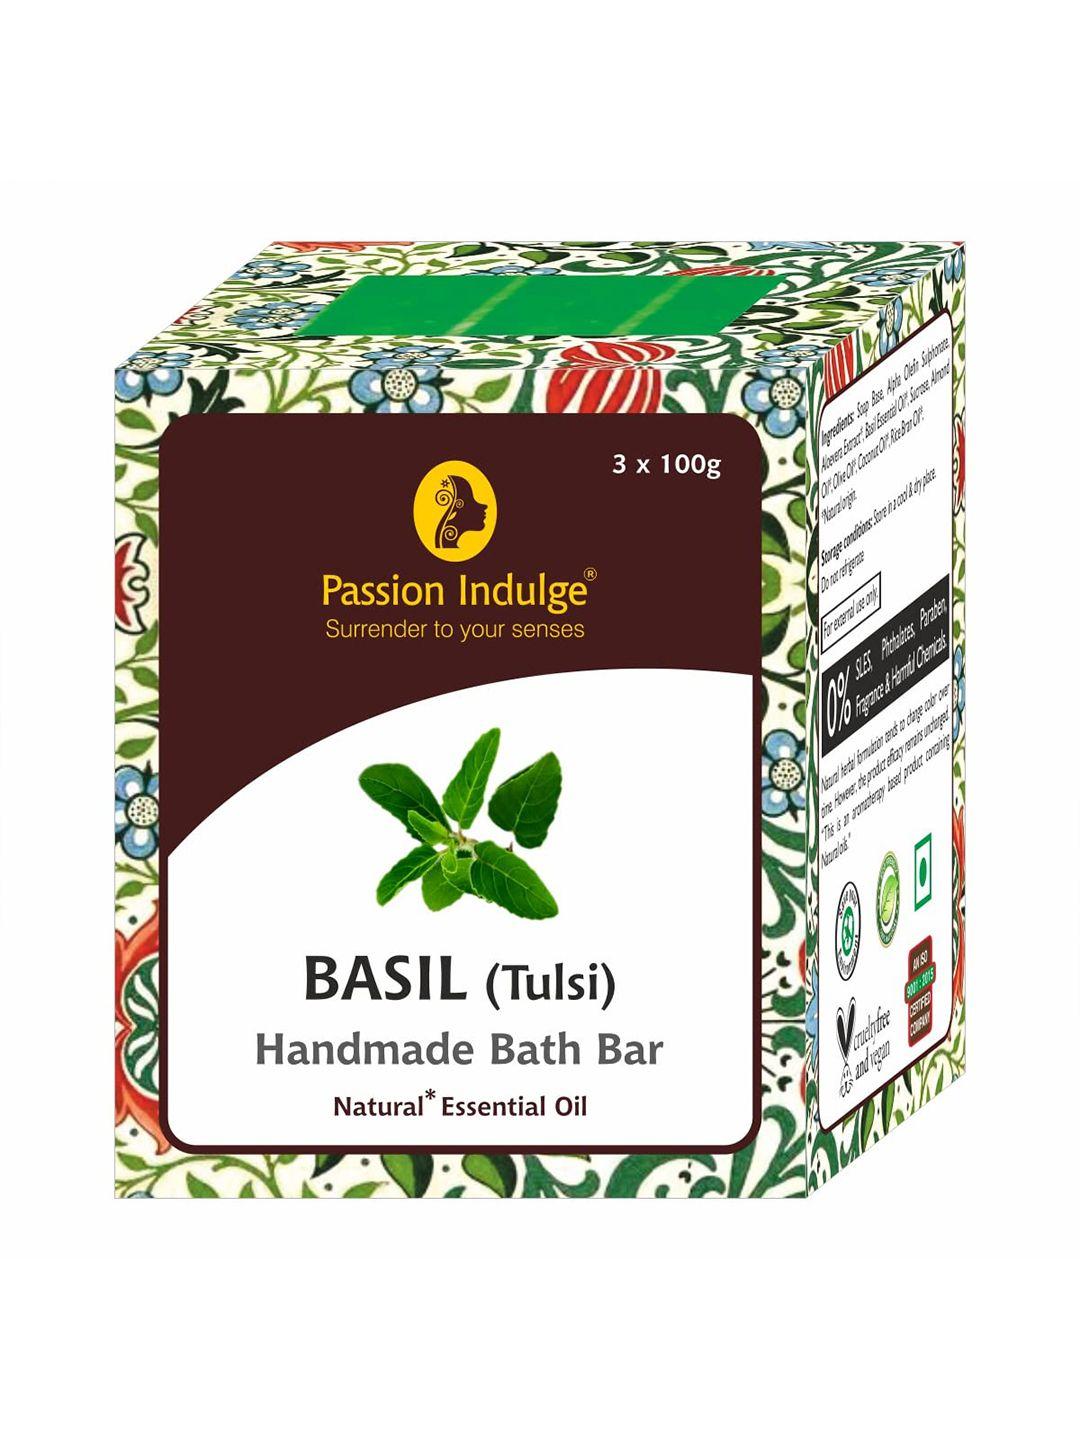 passion indulge pack of 3 natural handmade basil bath bar soaps